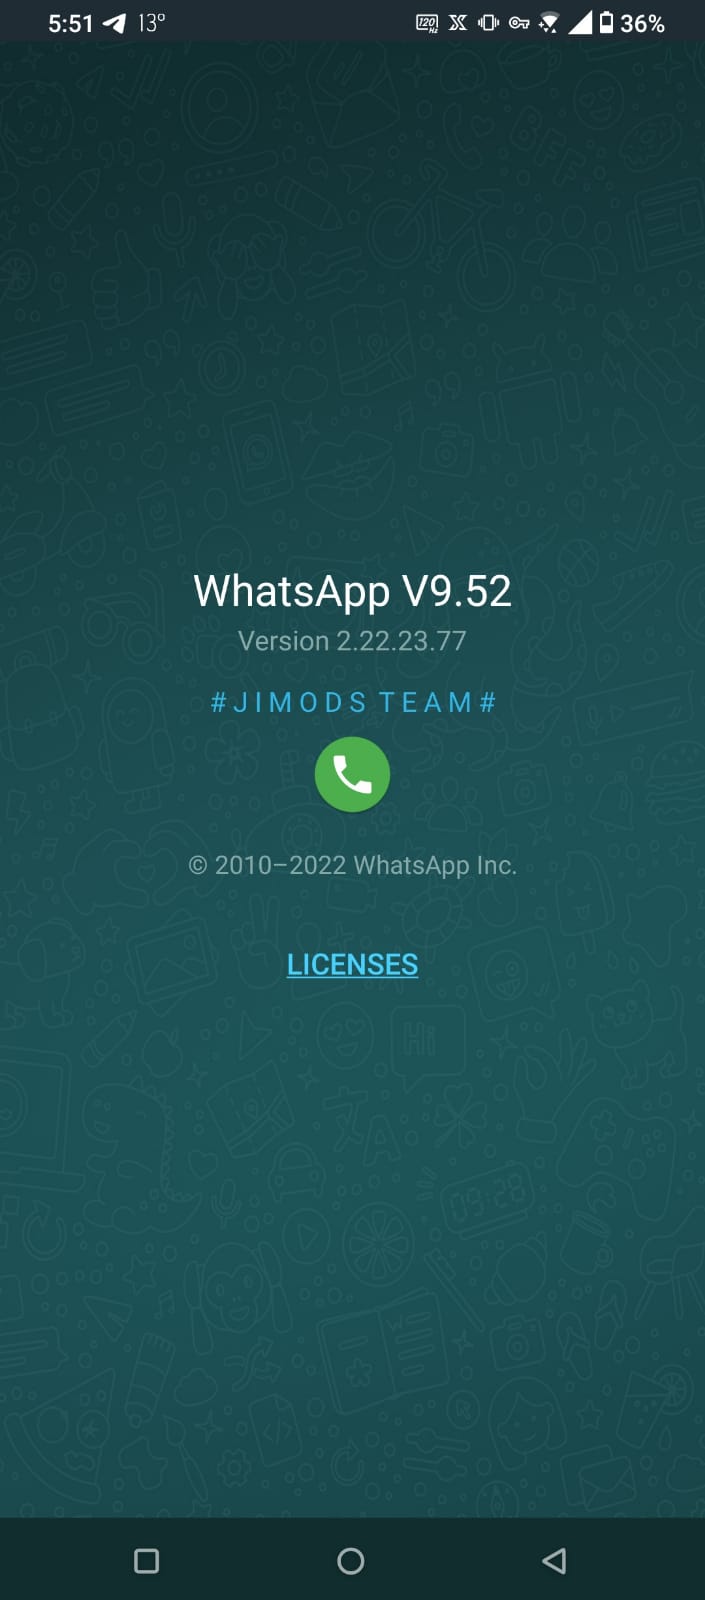 WhatsApp+ JiMODs v9.52 Jimtechs Editions